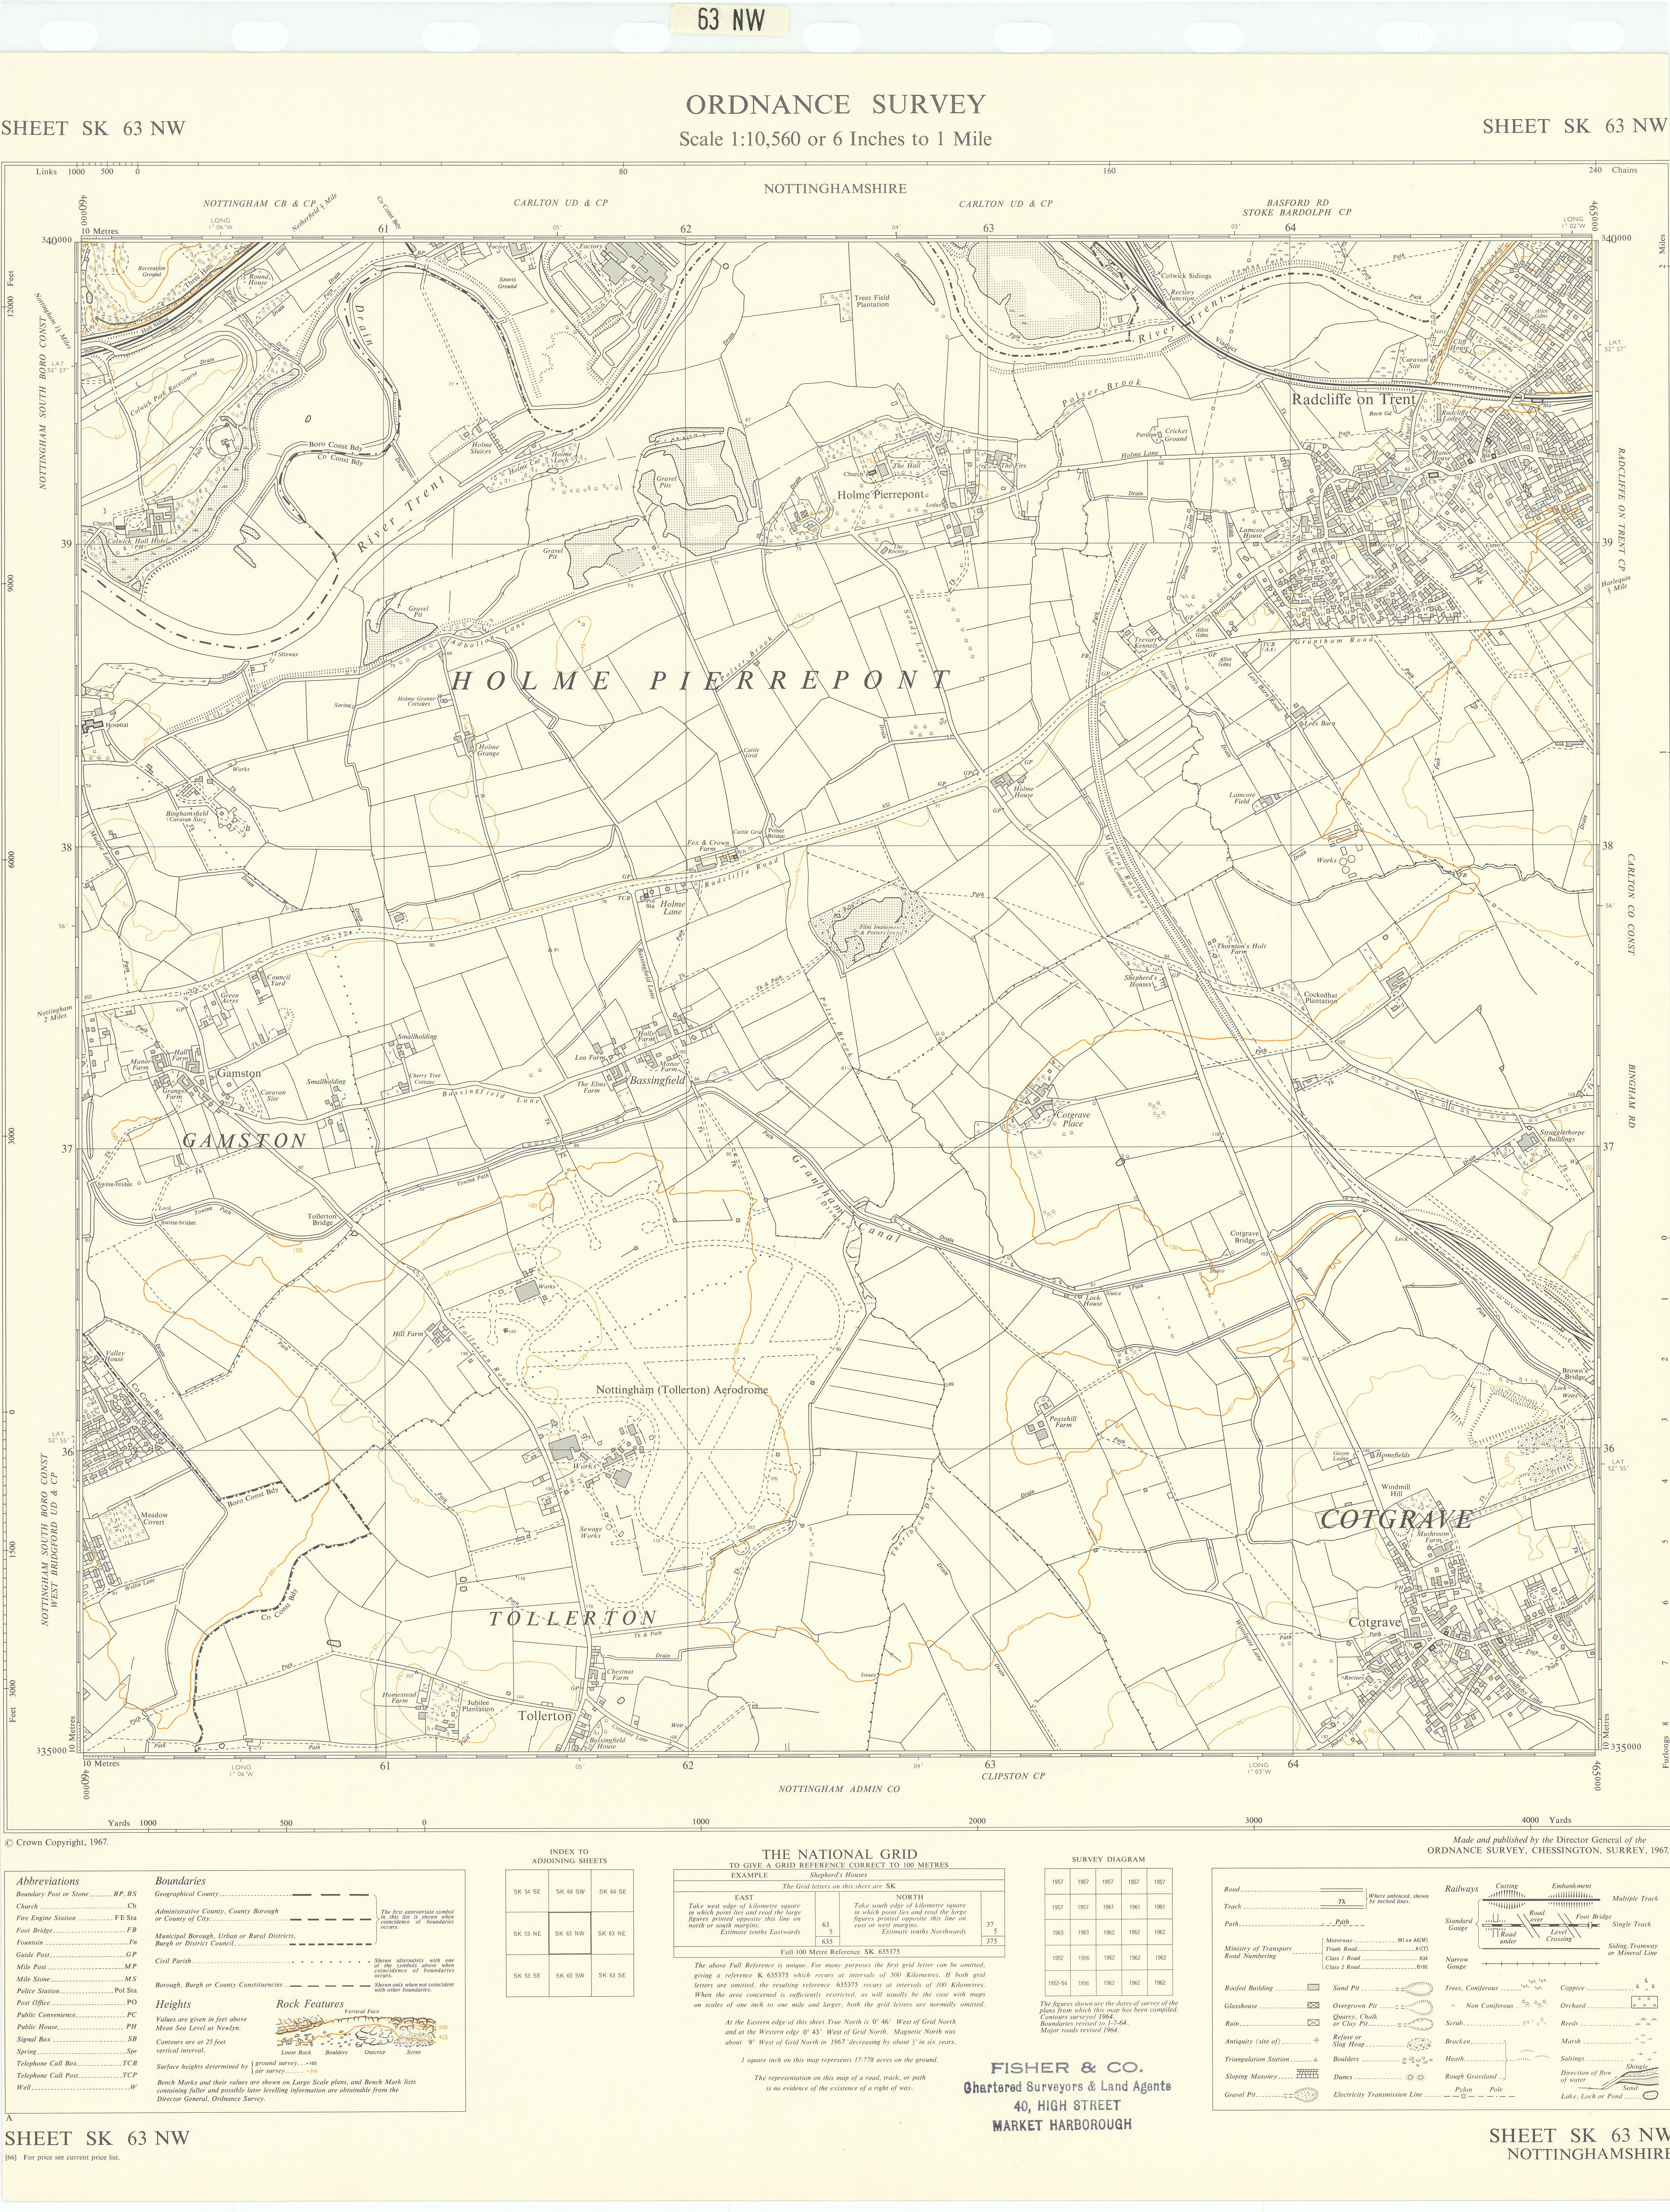 Ordnance Survey SK63NW Notts Radcliffe/Trent Cotgrave Hole Pierrepont 1967 map